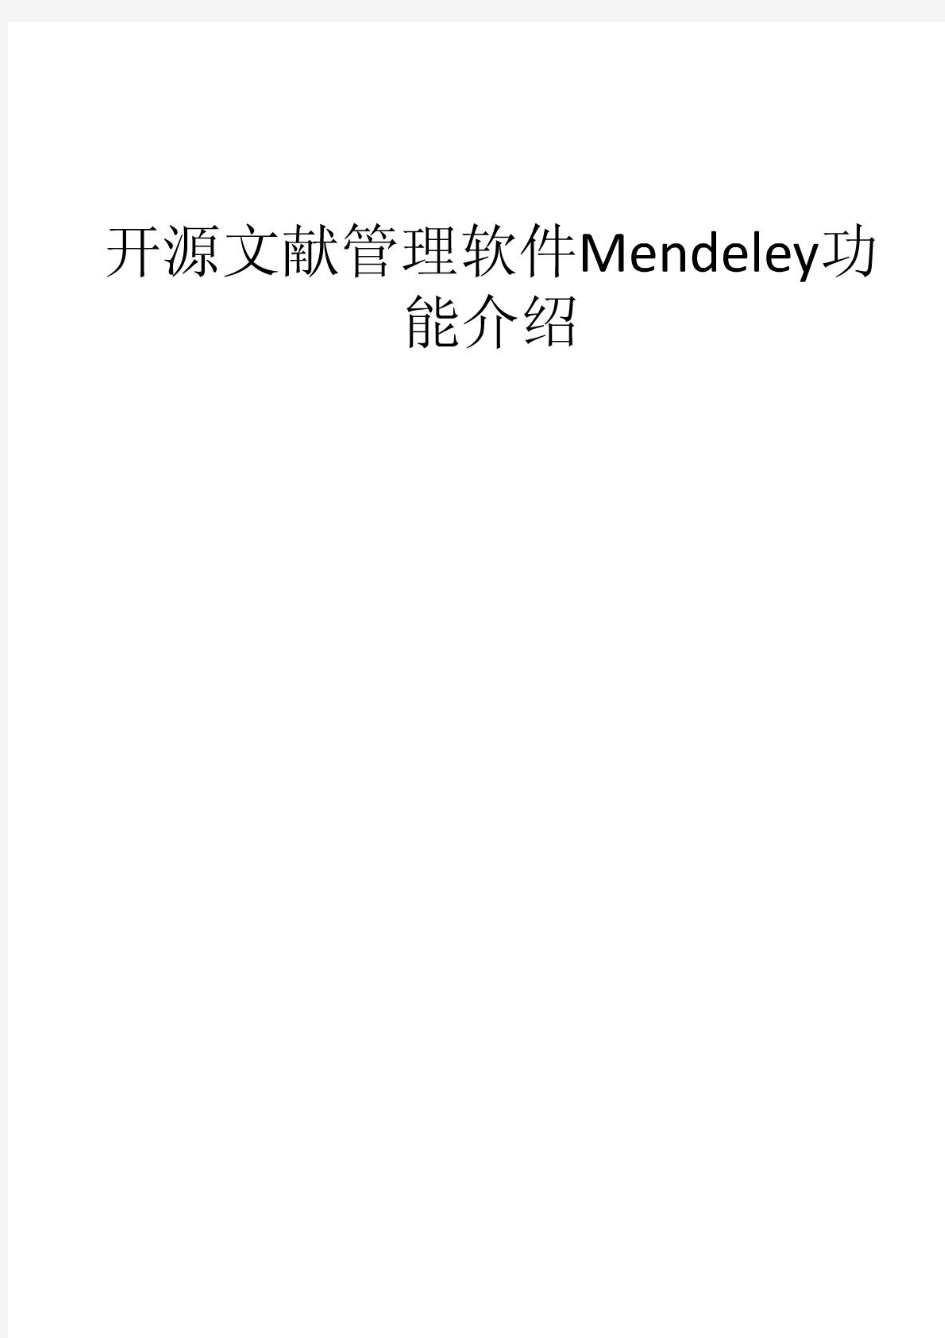 Mendeley中文入门教程